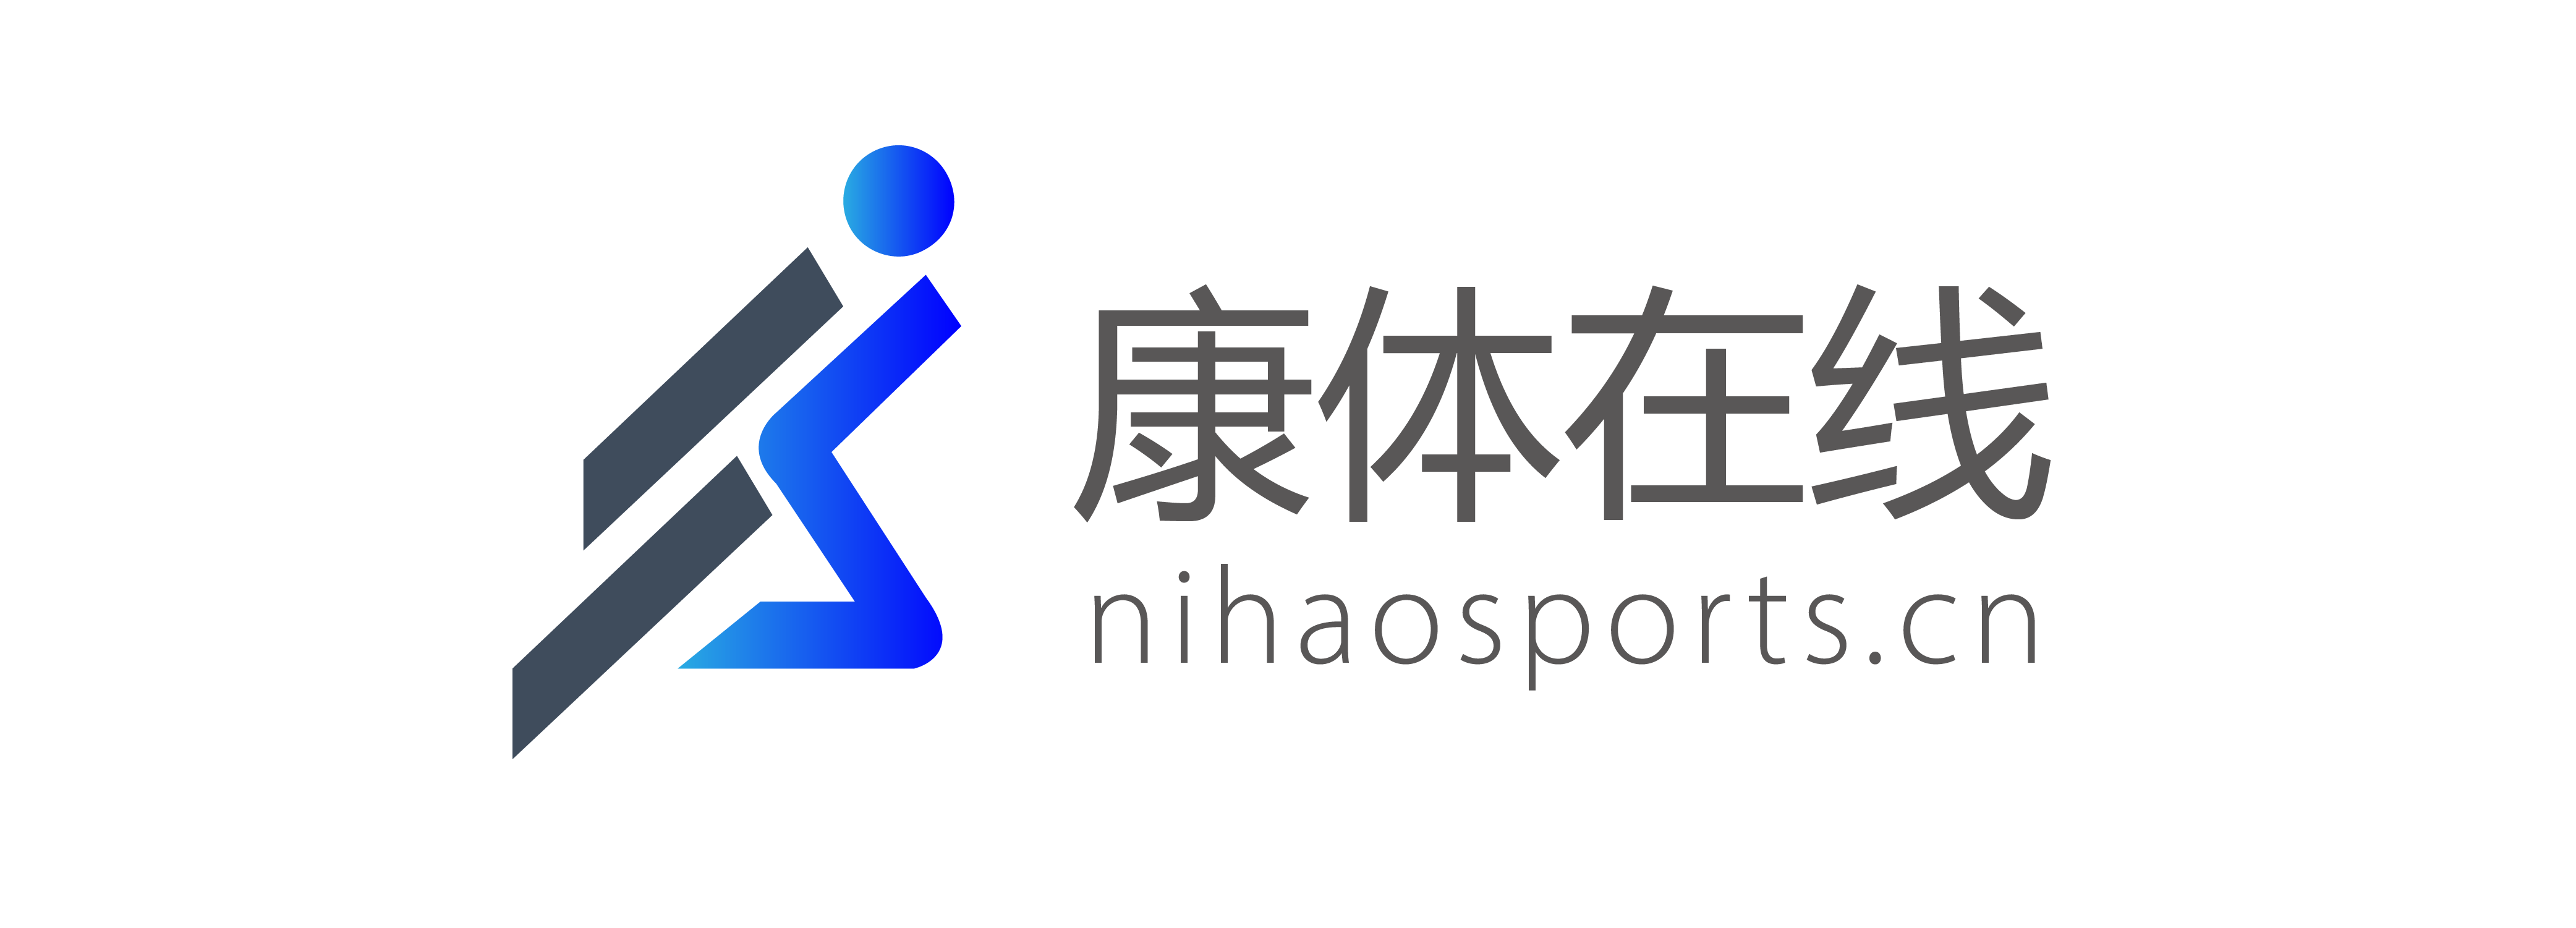 B2B အပင်ပုံစံ—Nihaosports